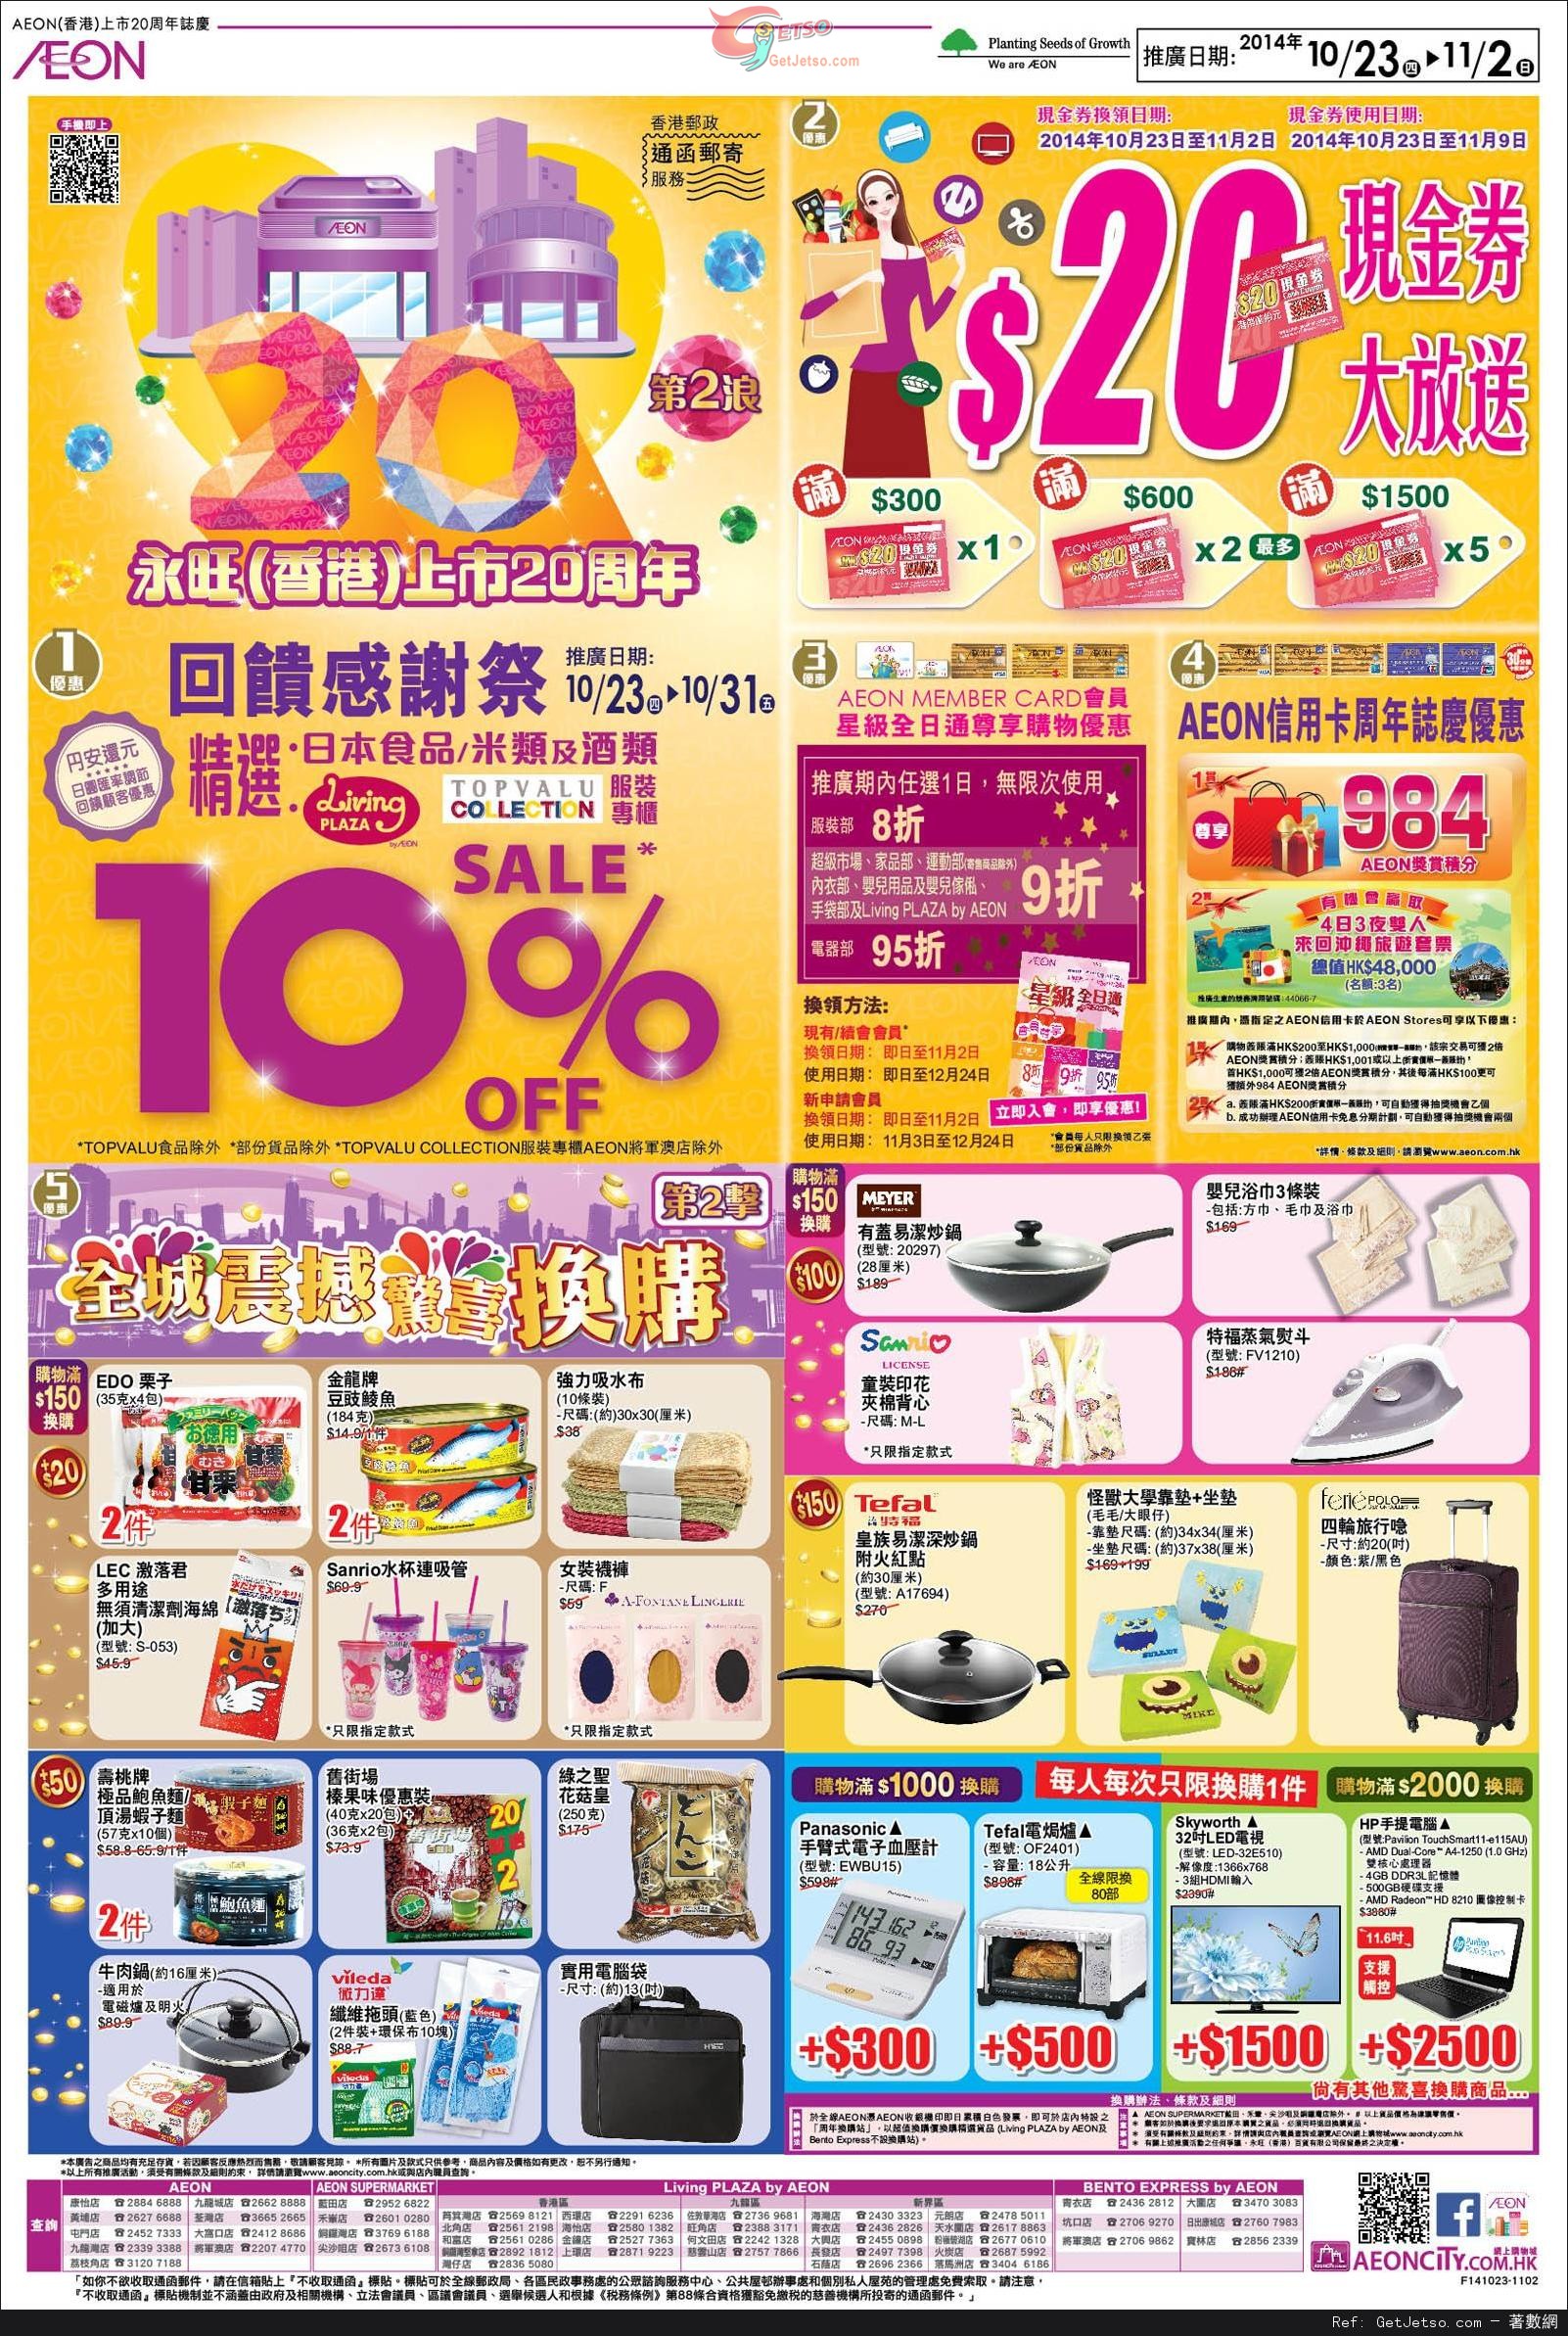 AEON 上市20週年誌慶-第2浪購物優惠(至14年11月2日)圖片1